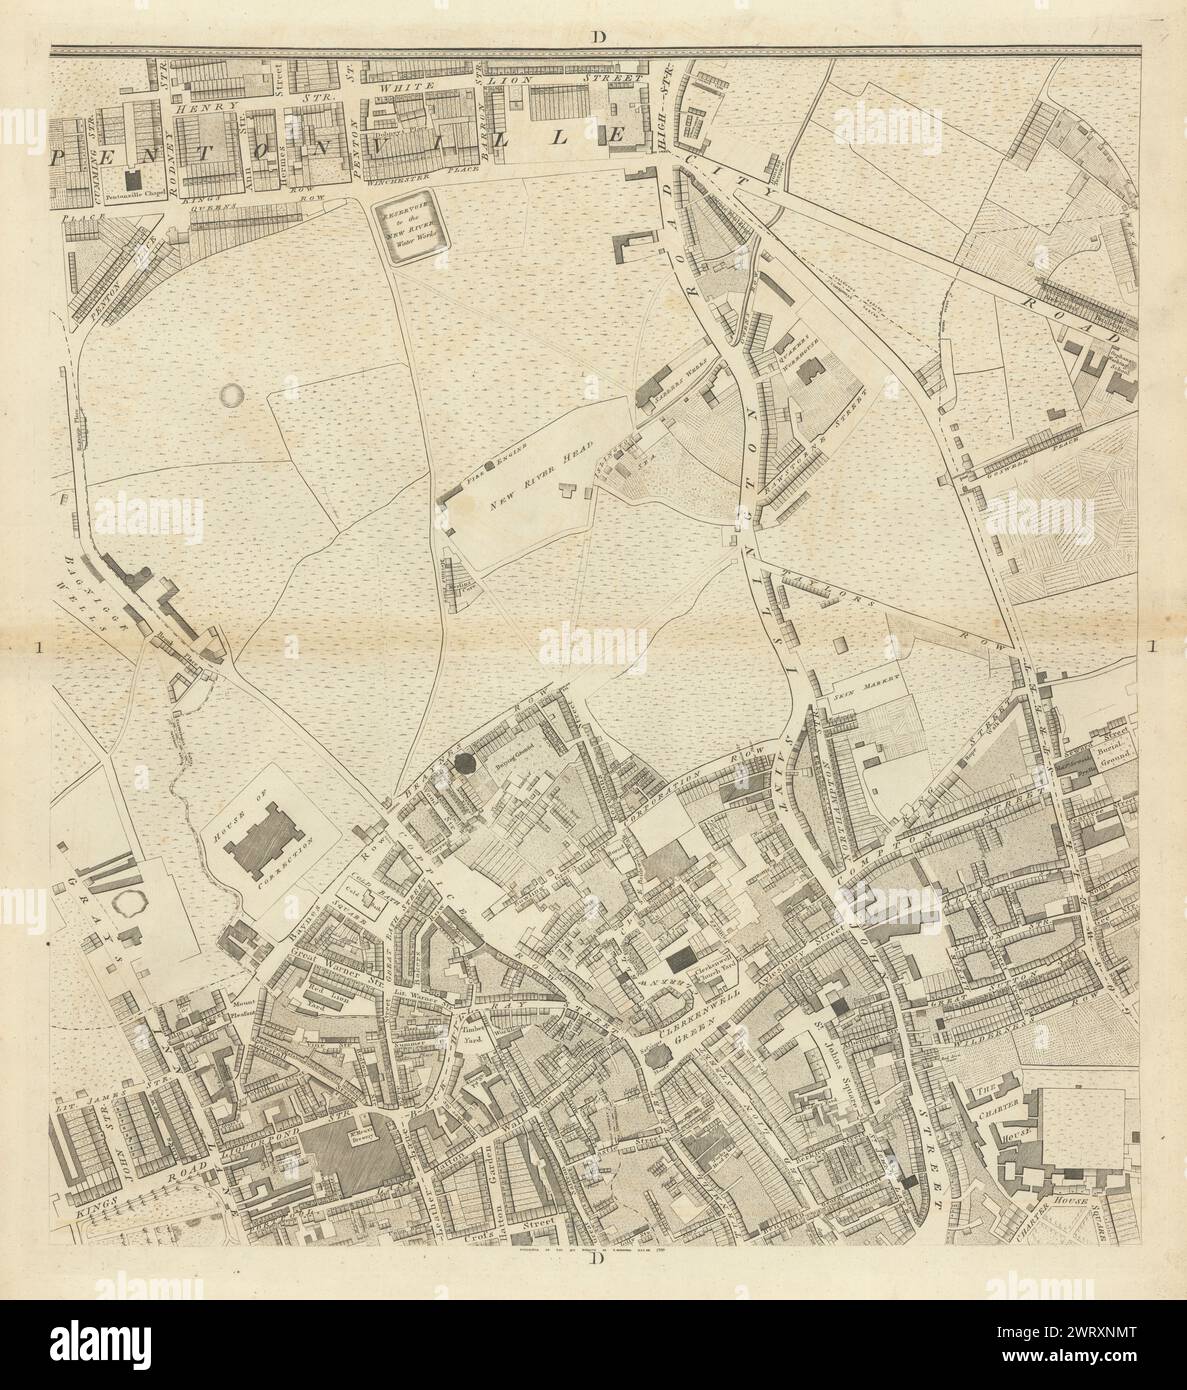 Horwood London D1 Clerkenwell Pentonville Gray's Inn City Road 1799 vecchia mappa Foto Stock